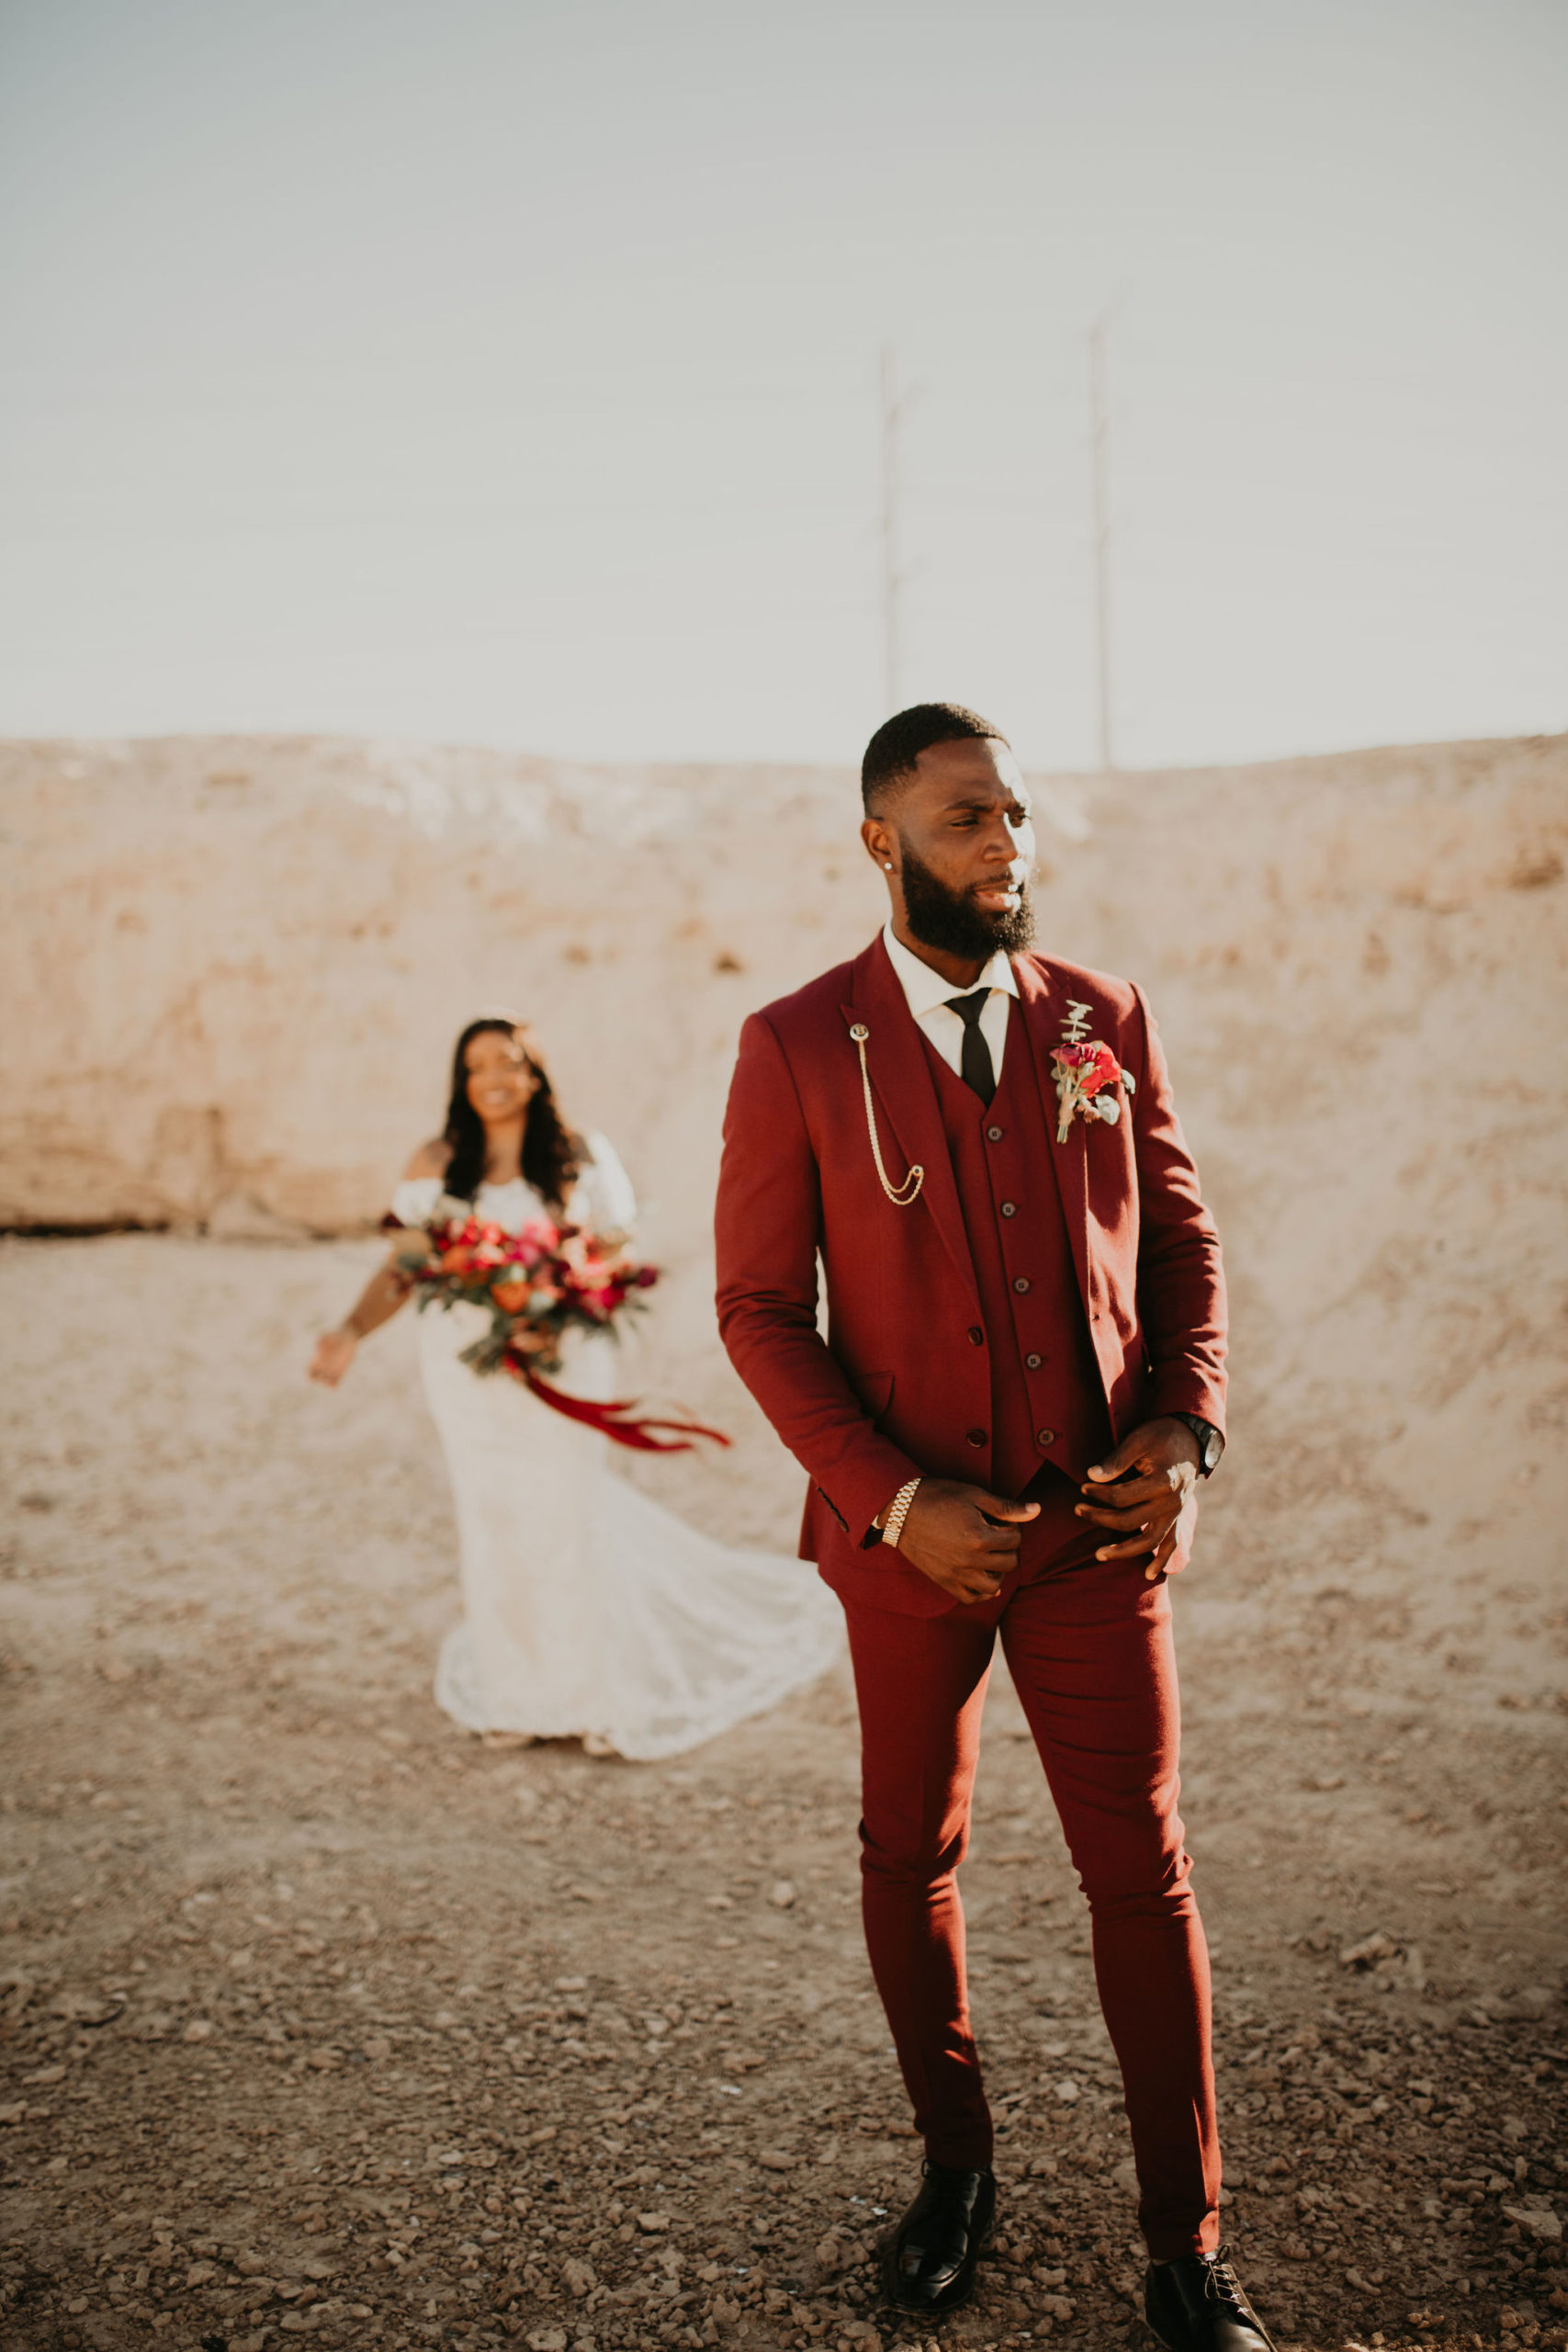 Bride Approaching Groom during First Look in Desert 